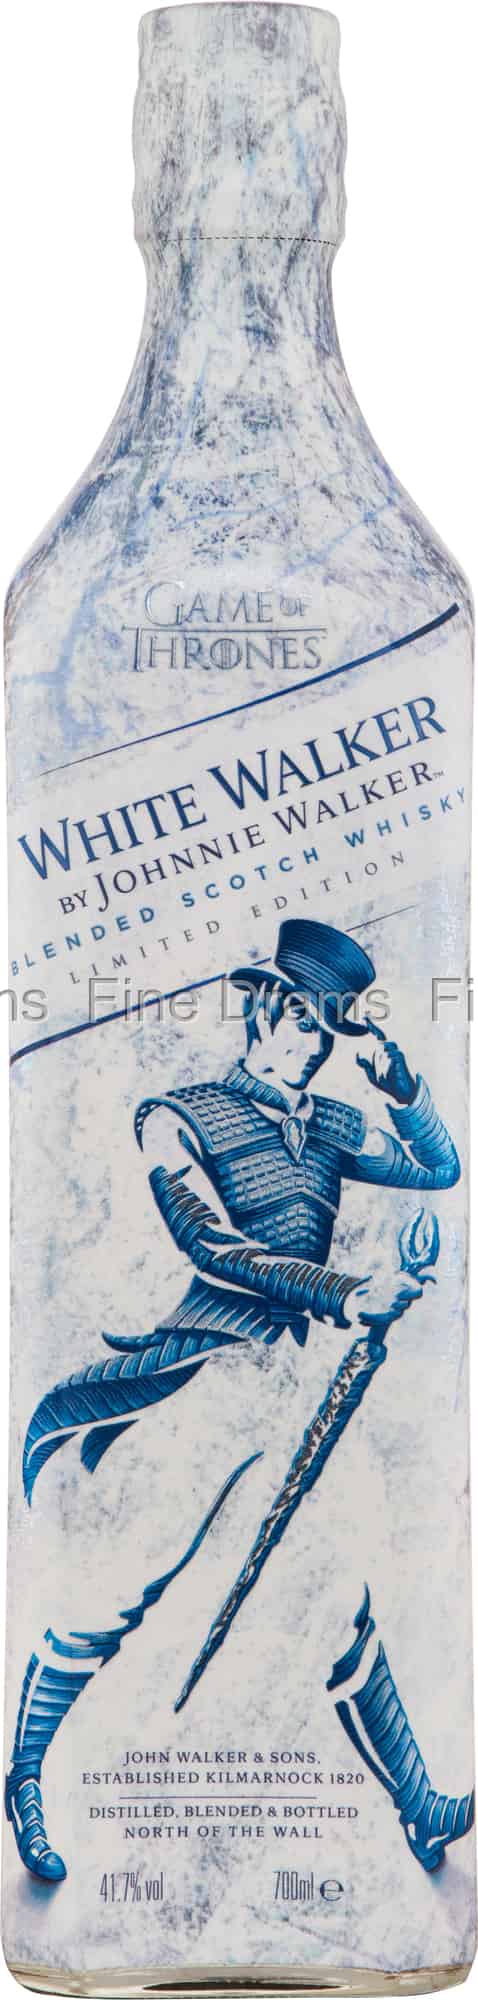 Johnnie Walker White Whisky